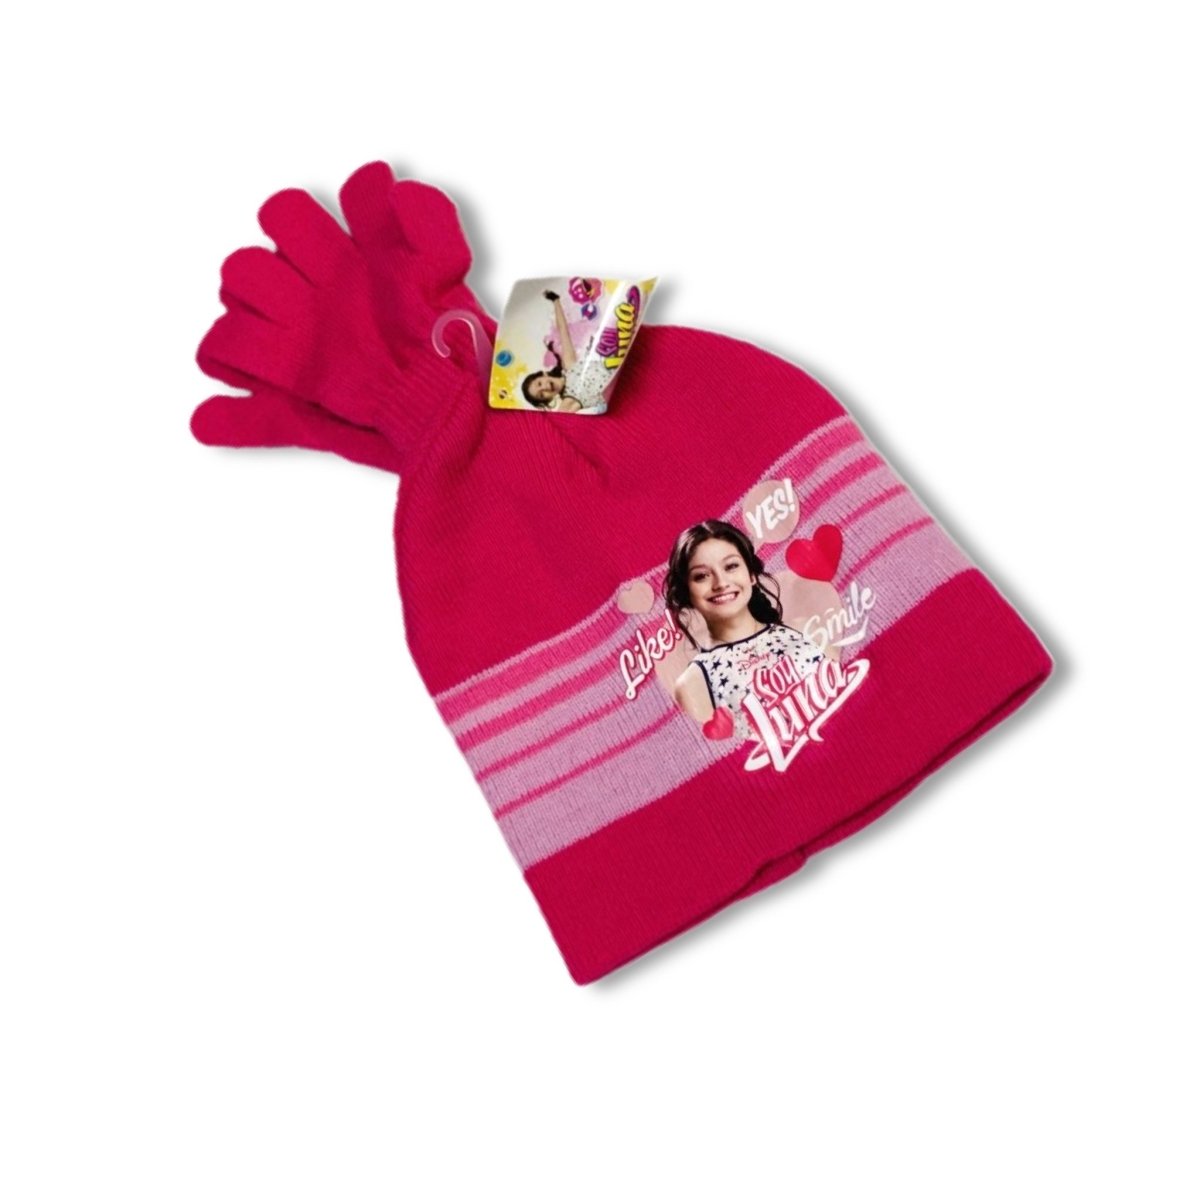 Cappello in Lana Soy Luna - Mstore016 - cappelli - Disney